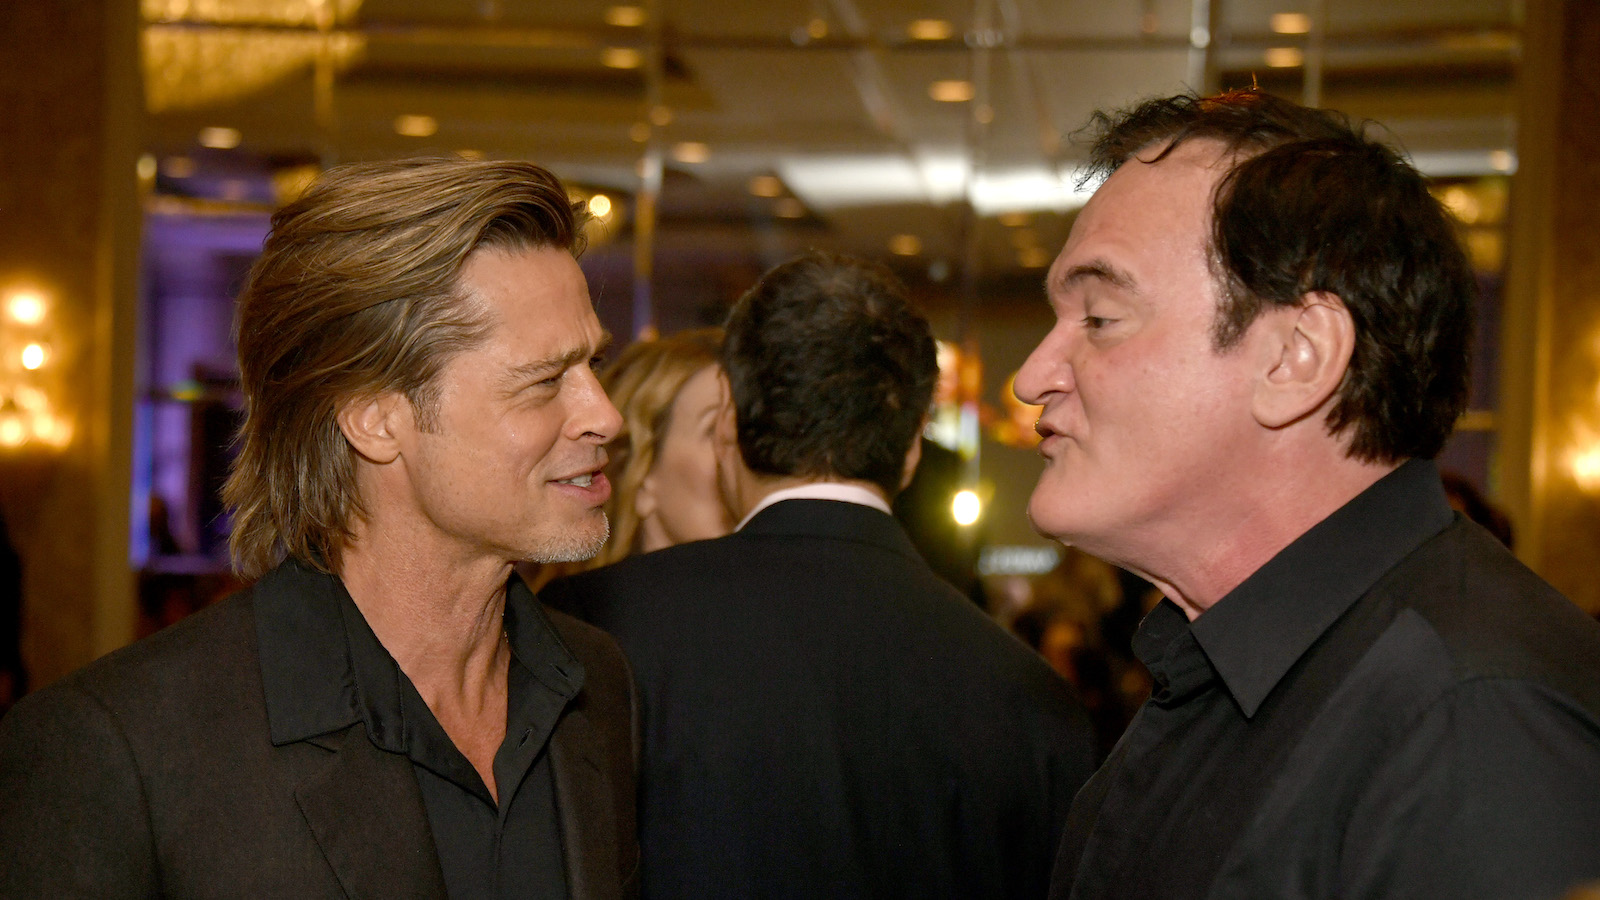 Quentin Tarantino says you can’t describe Brad Pitt, immediately before describing him